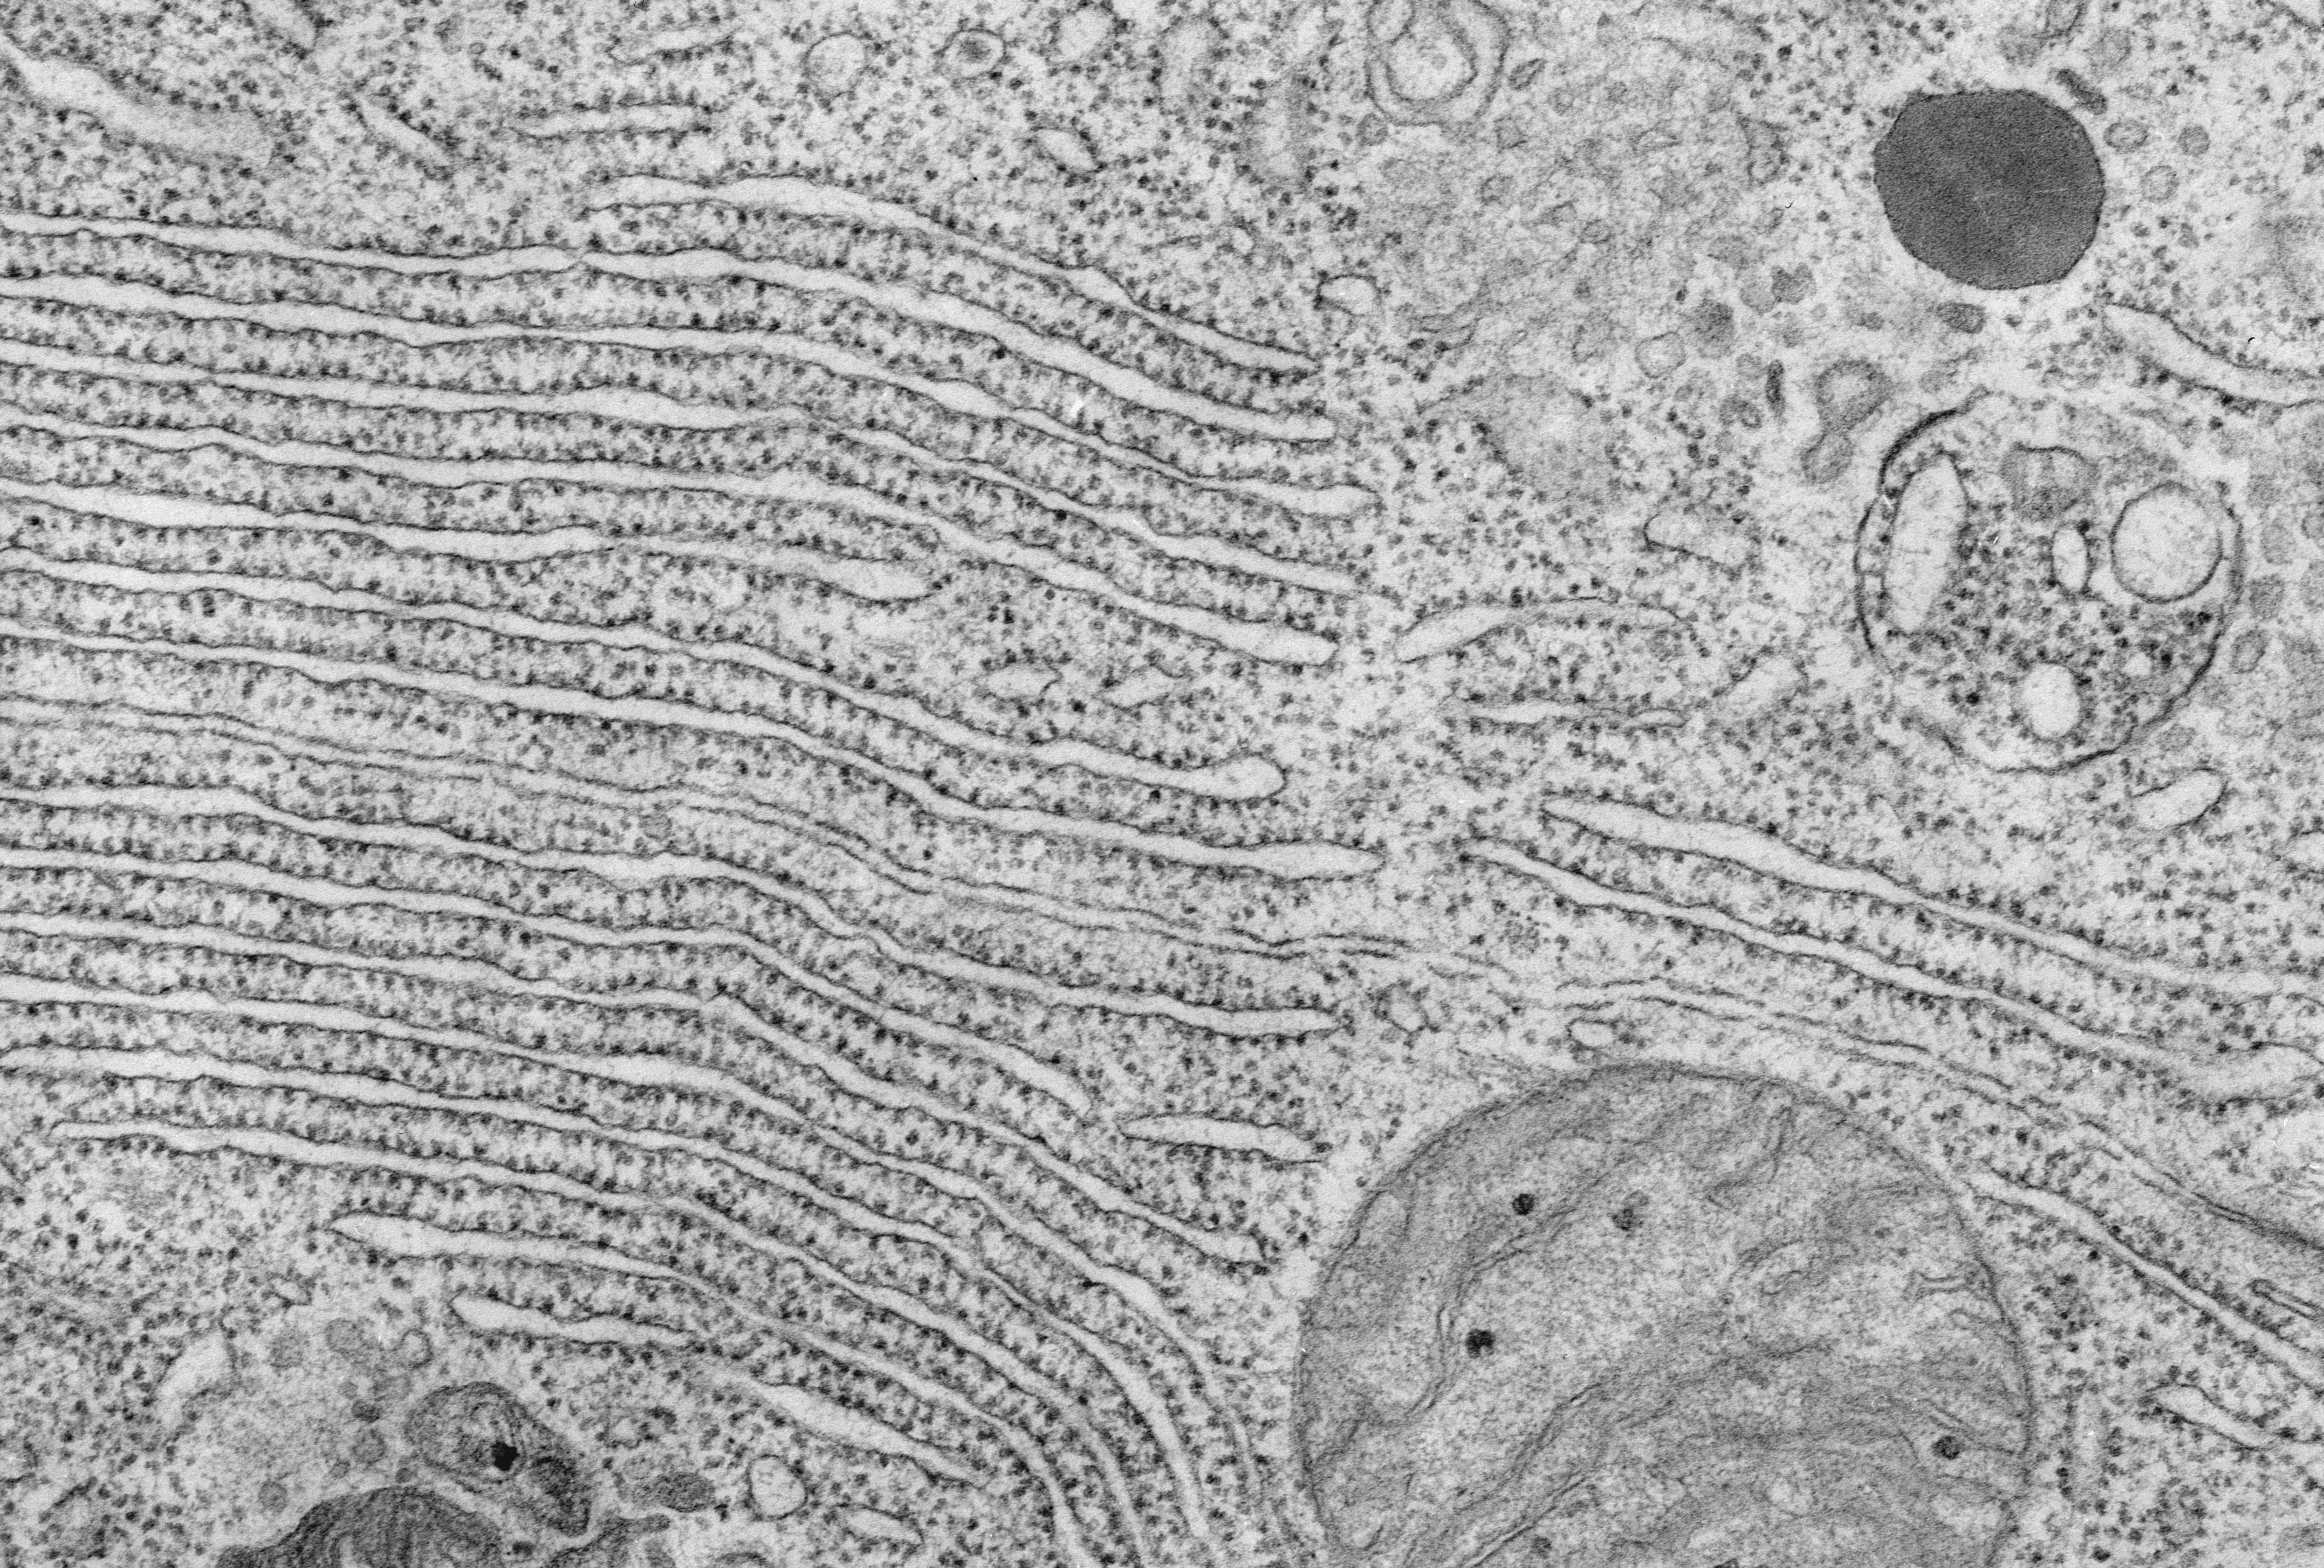 Endoplasmic Reticulum Electron Micrograph